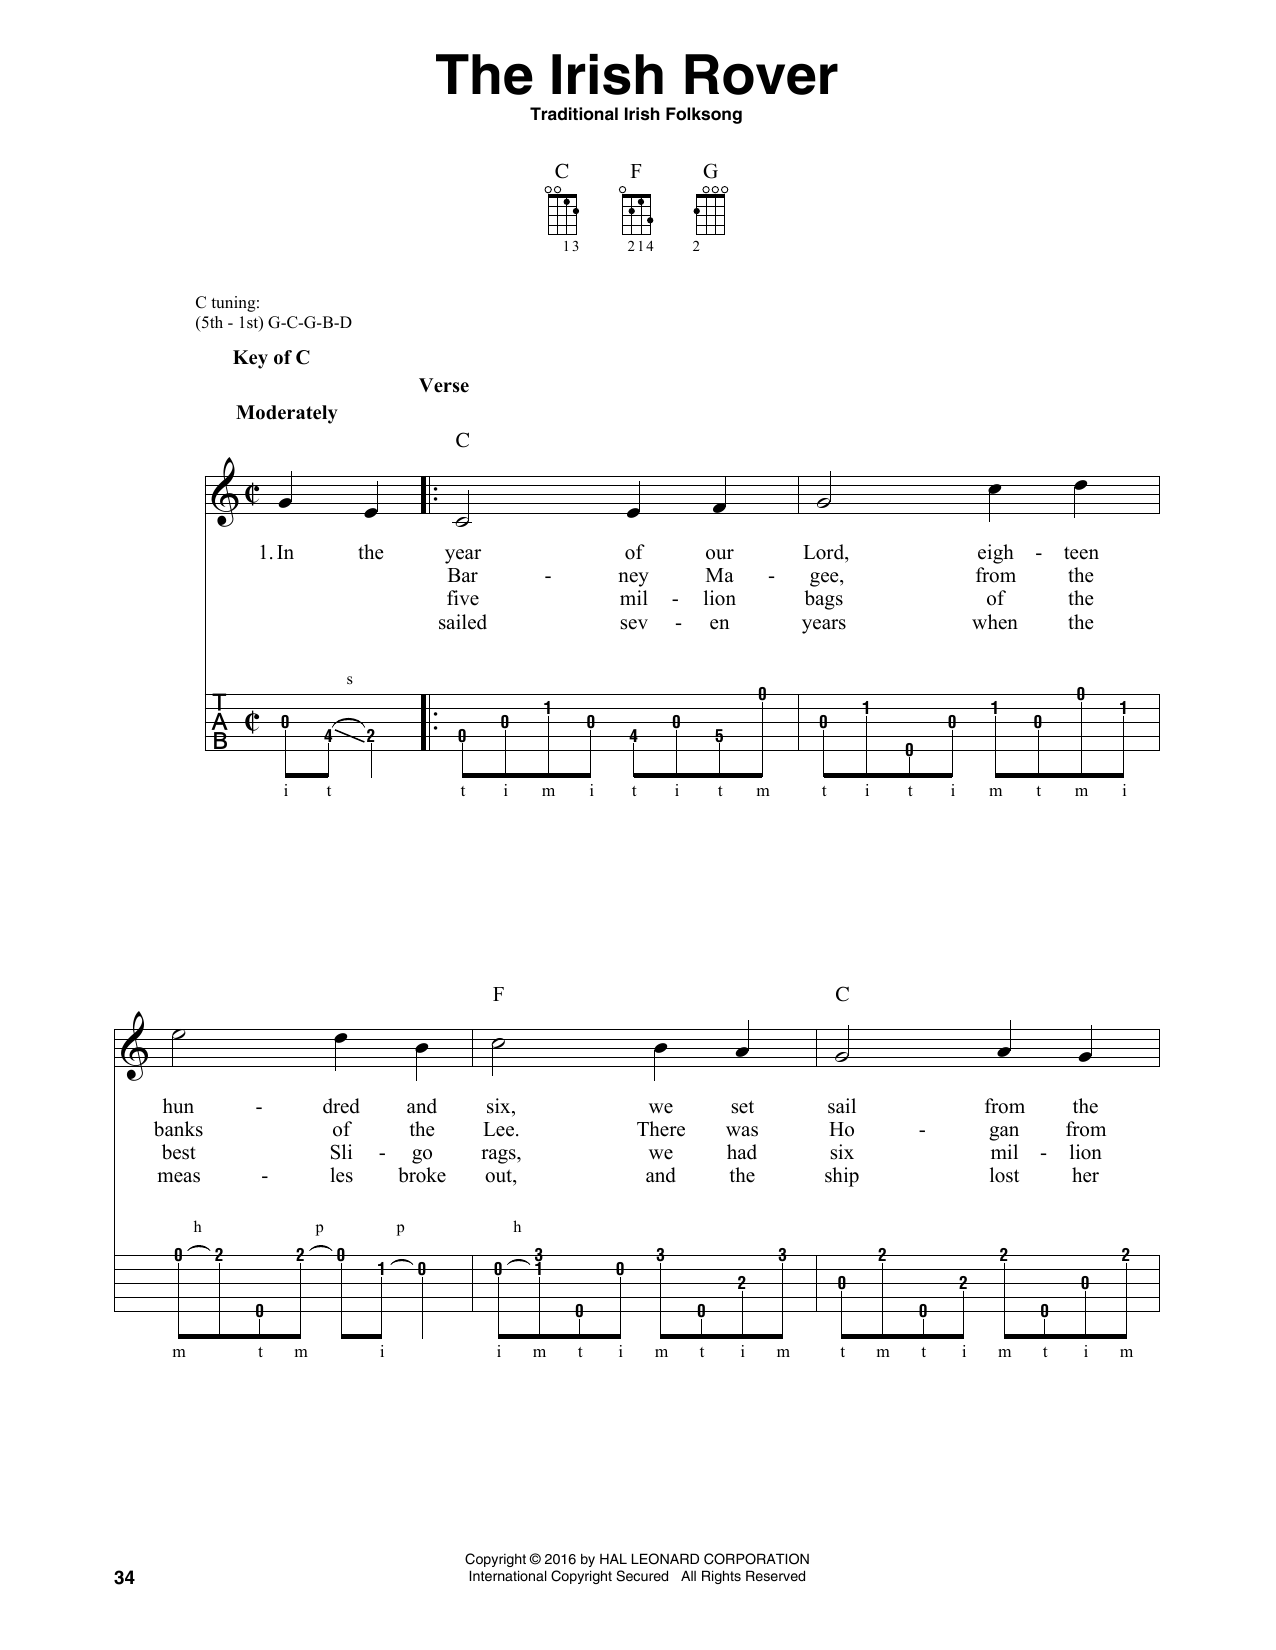 Traditional Irish Folk Song The Irish Rover Sheet Music Notes & Chords for Banjo - Download or Print PDF